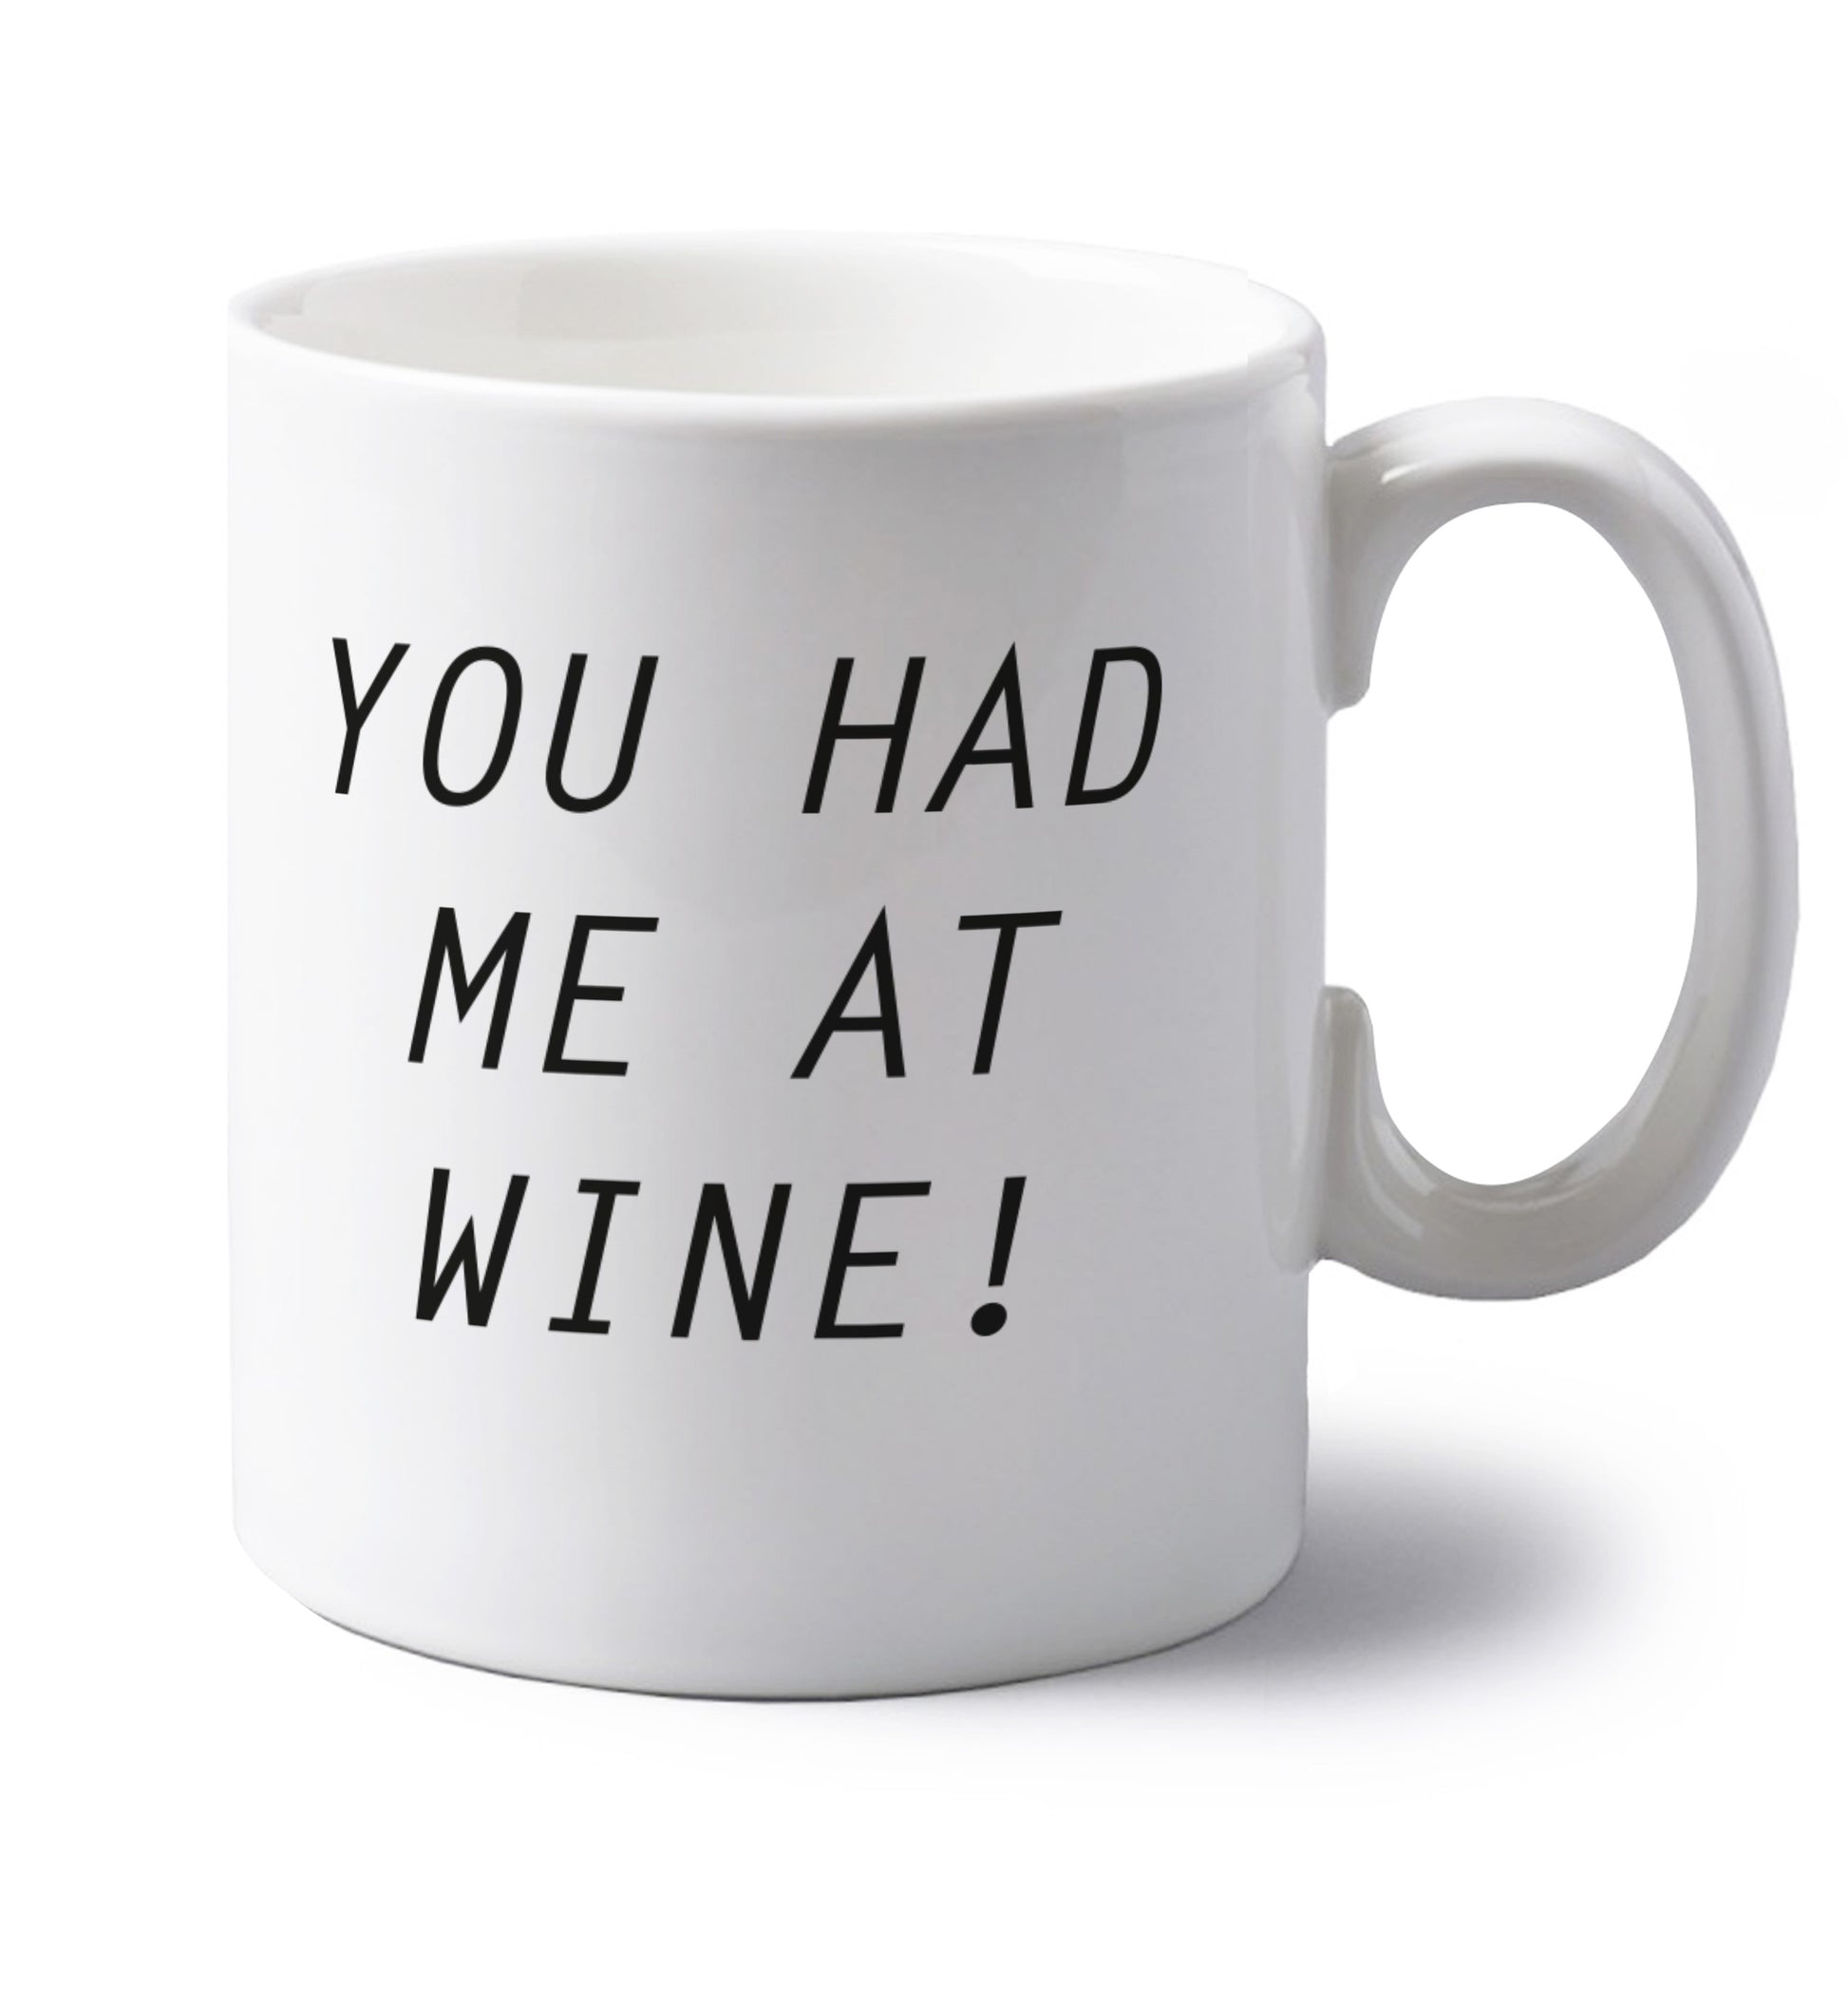 You had me at wine left handed white ceramic mug 